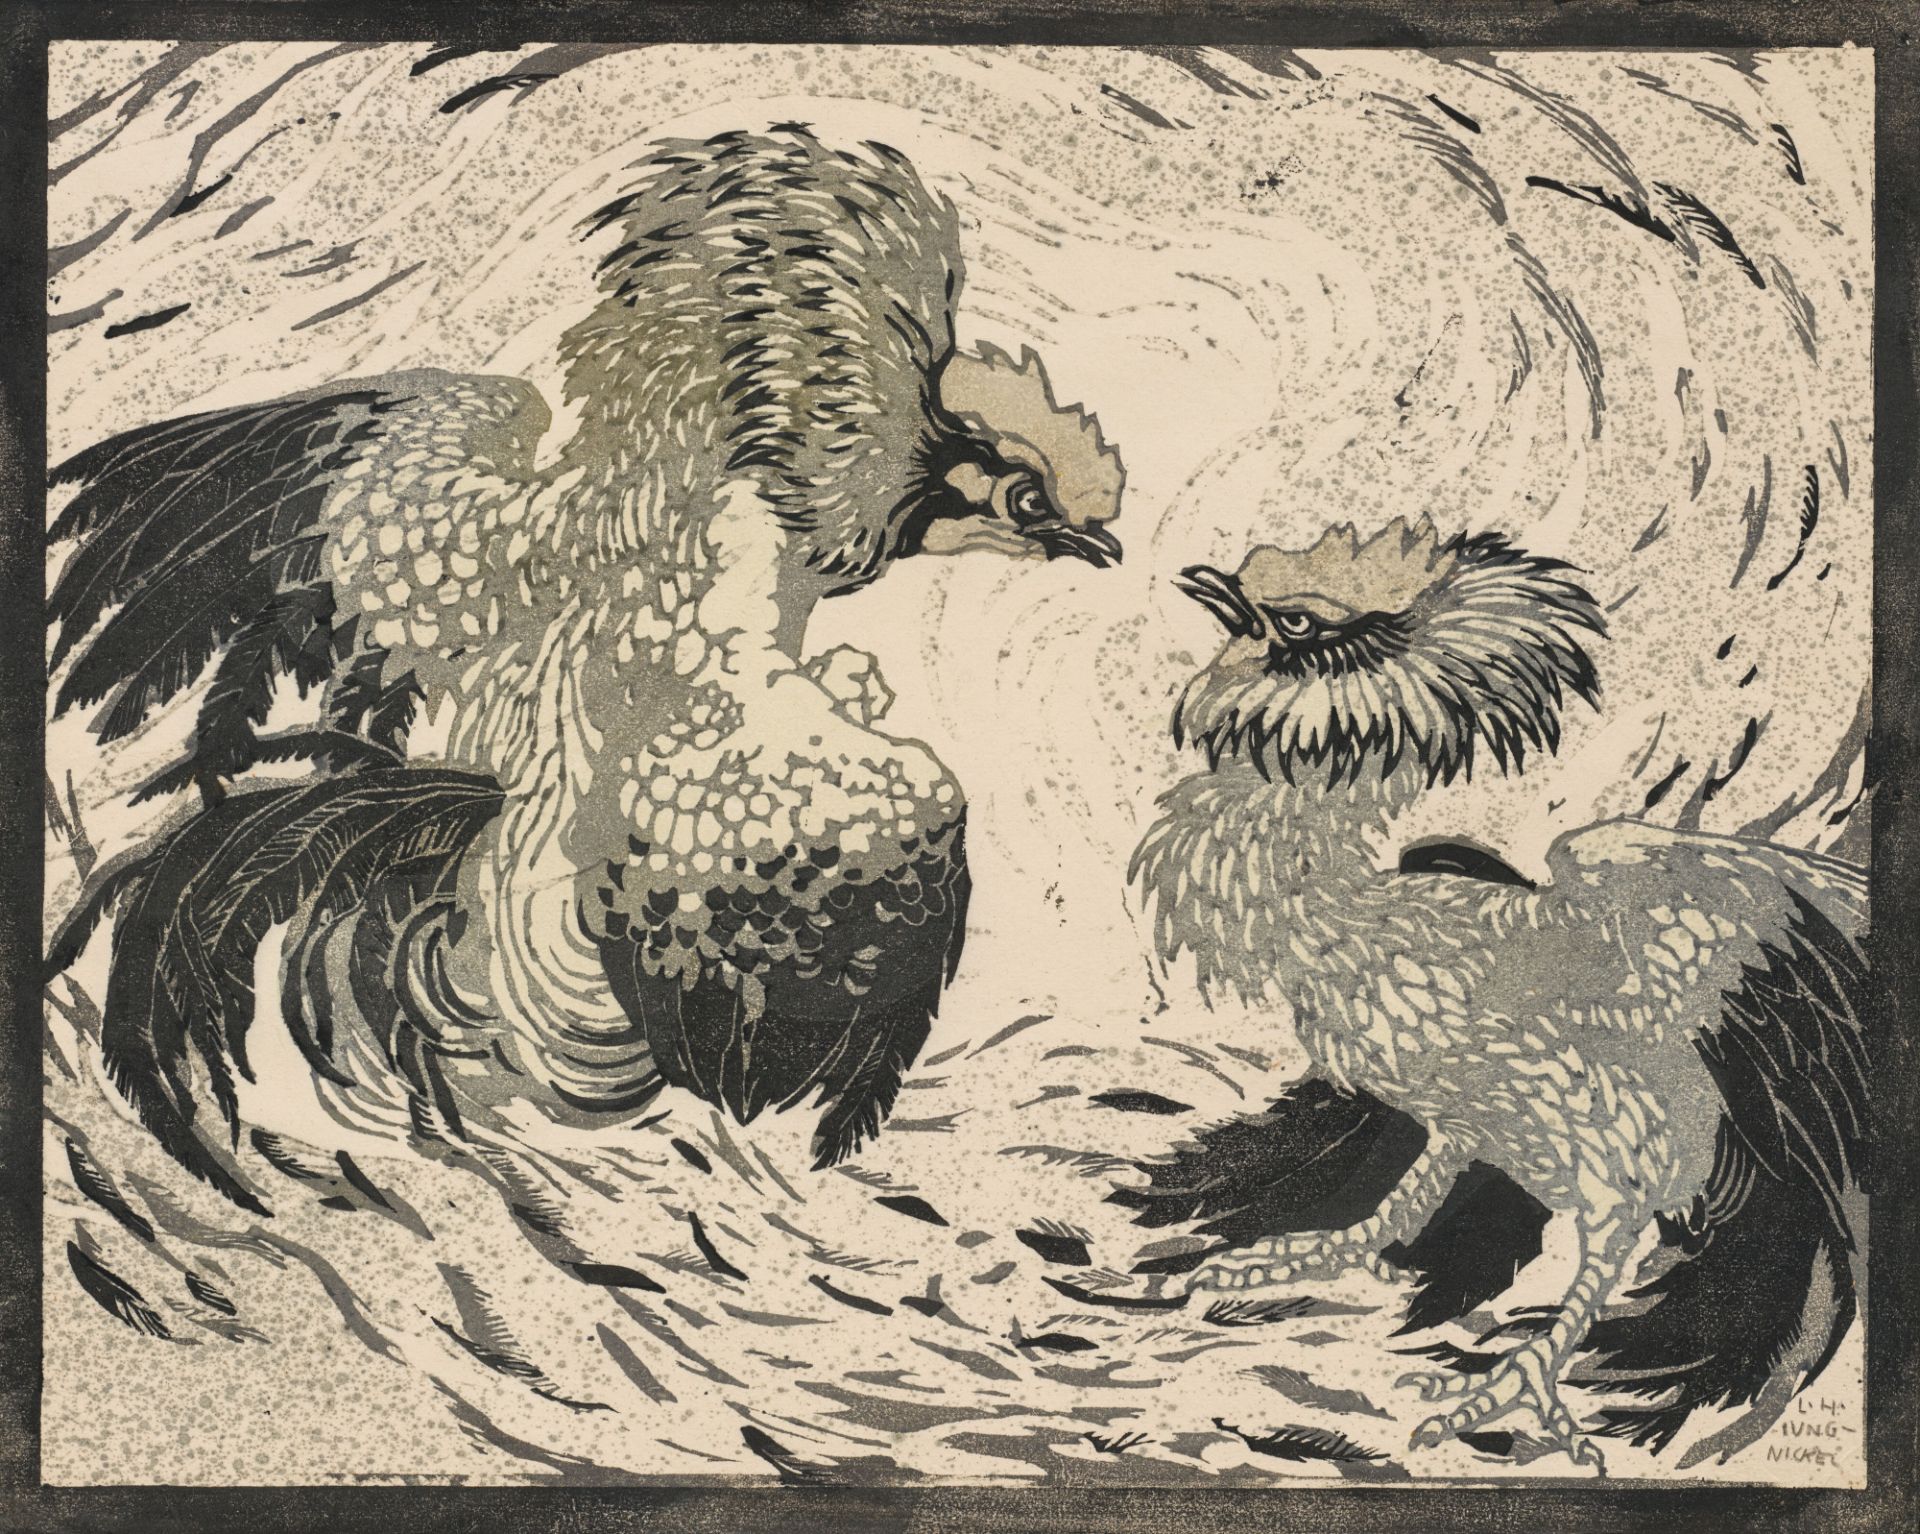 Ludwig Heinrich Jungnickel: Fighting roosters ("Schönbrunner Tiertypen")